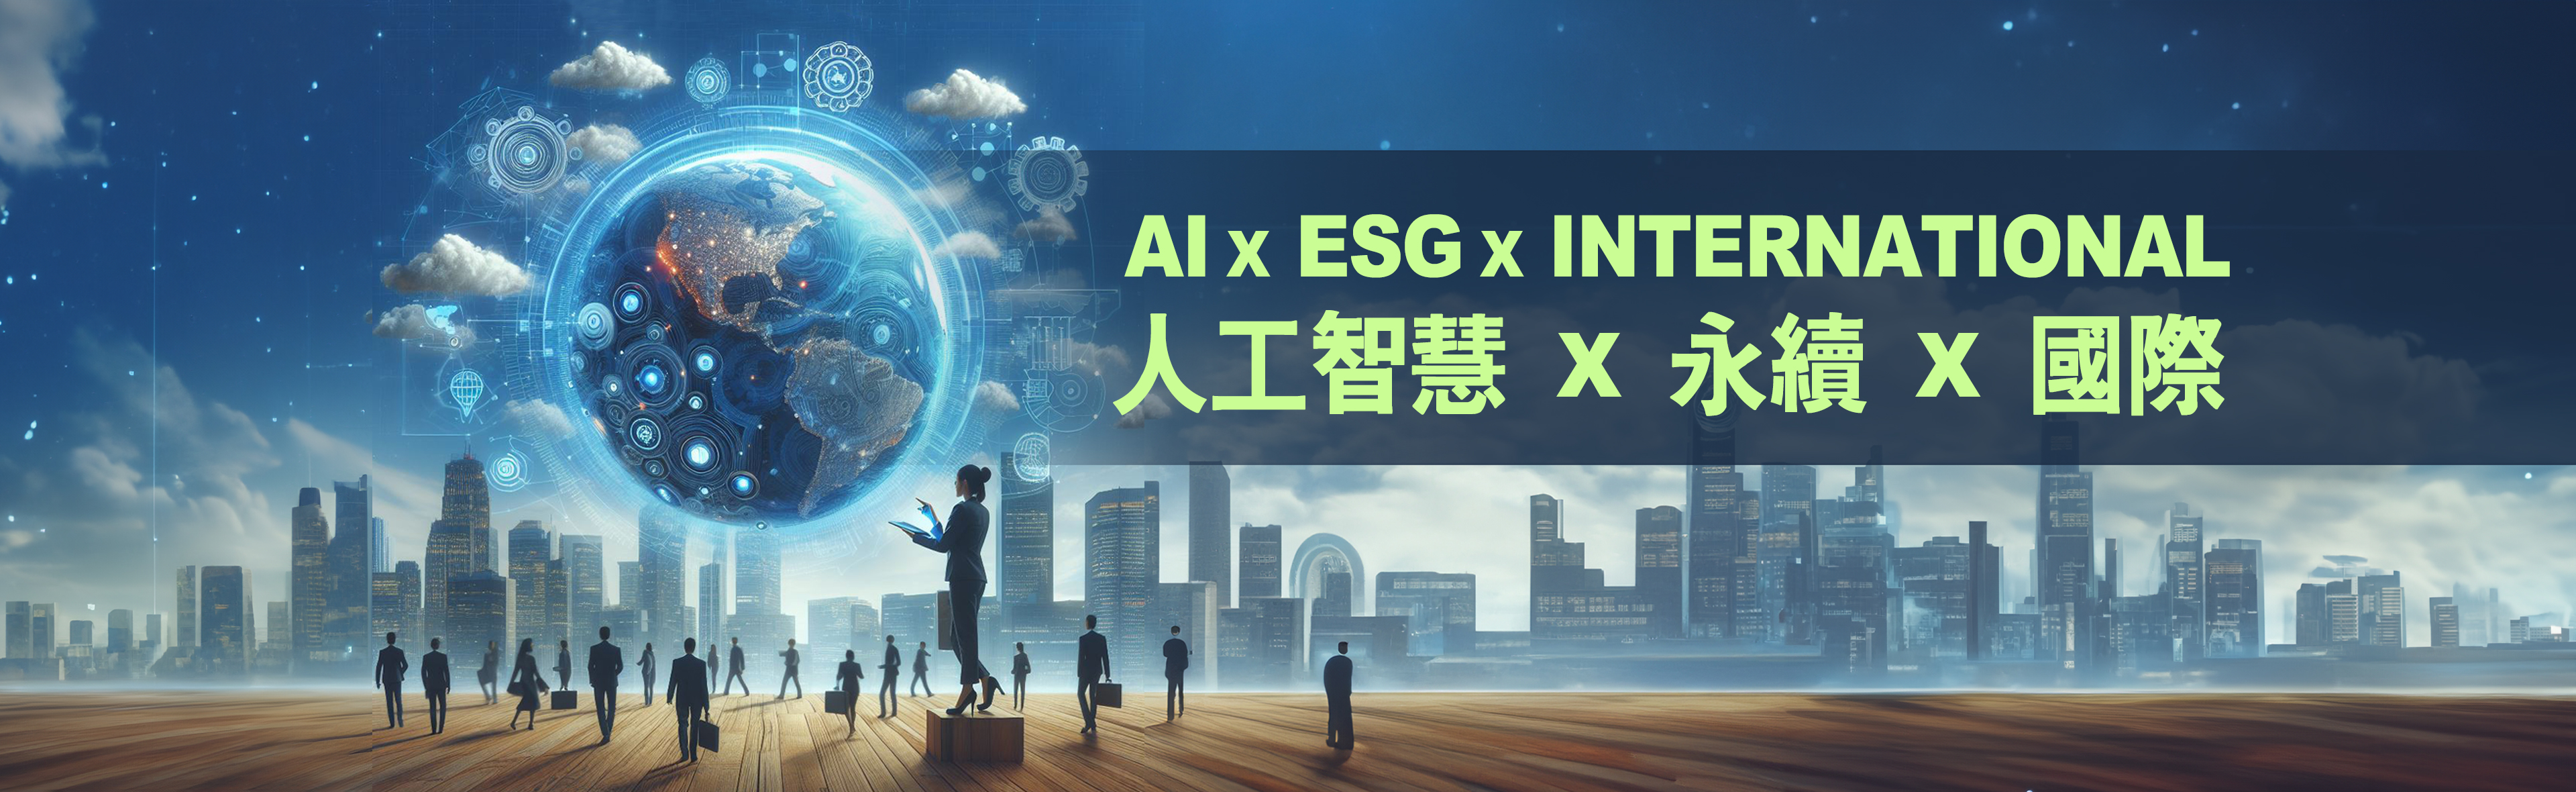 074.AI-ESG-INTERNATIONAL-1920X1080圖-2